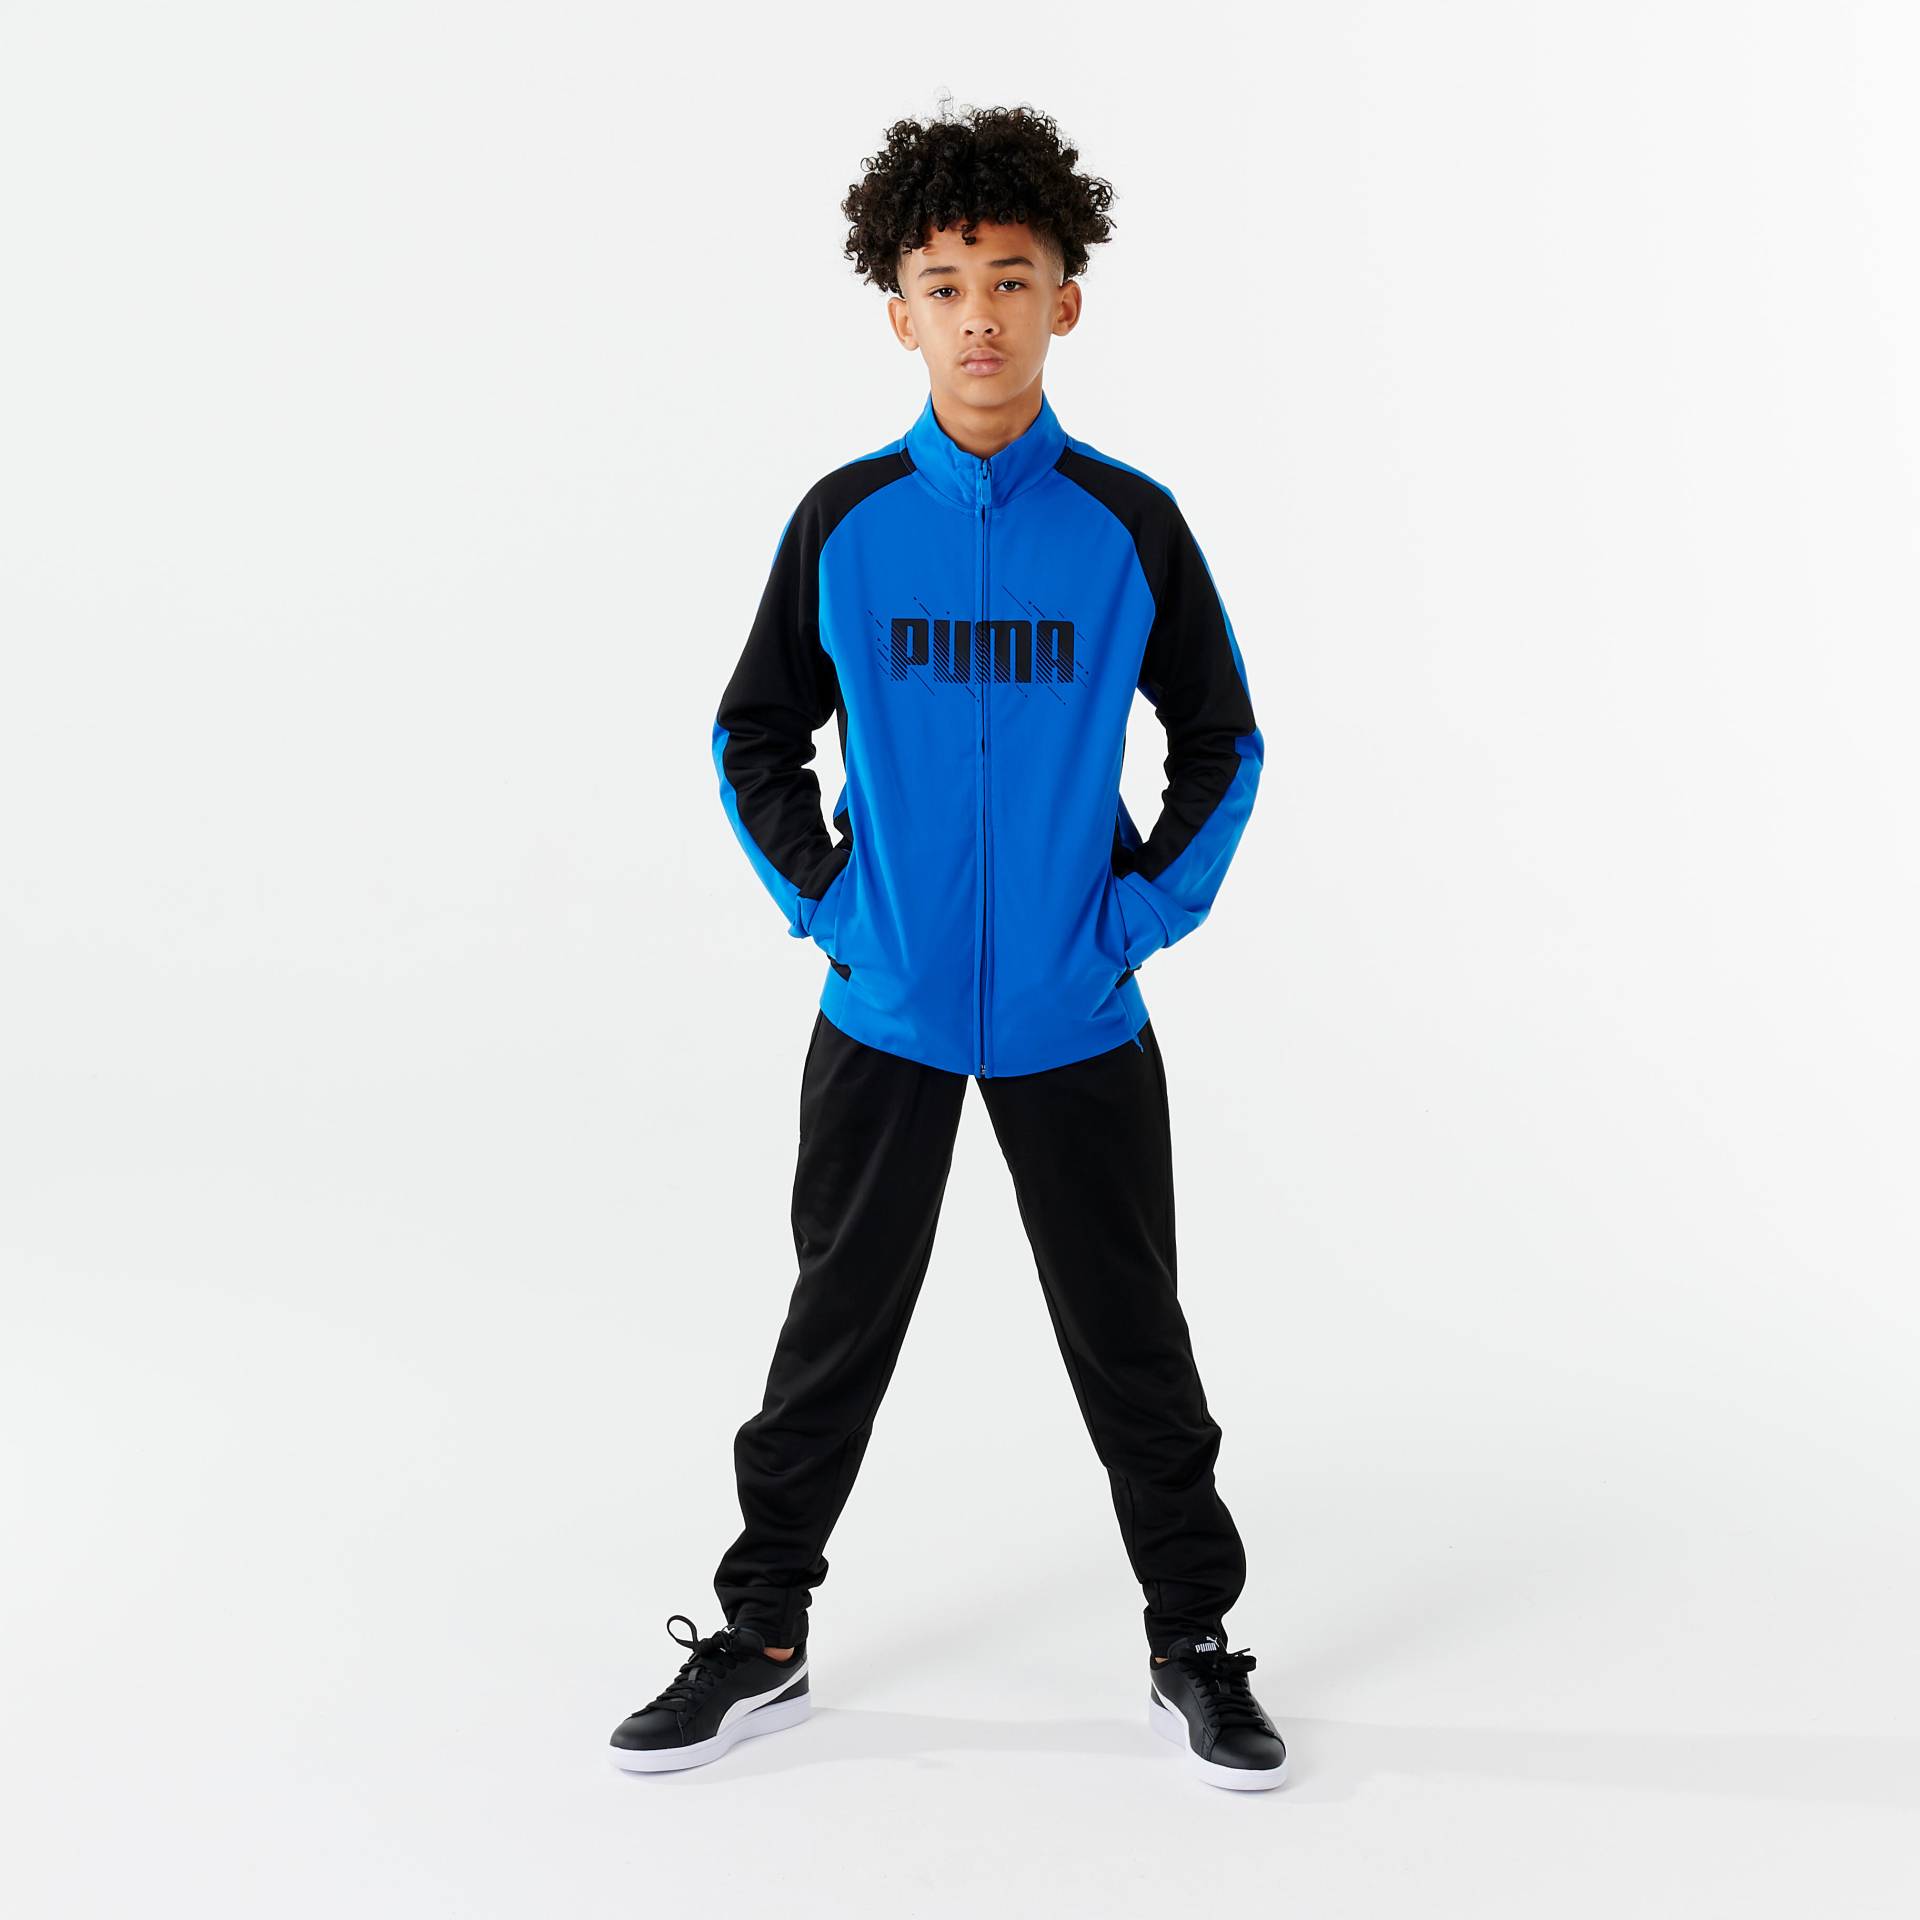 Puma Trainingsanzug Kinder Synthetik atmungsaktiv - schwarz/blau von Puma